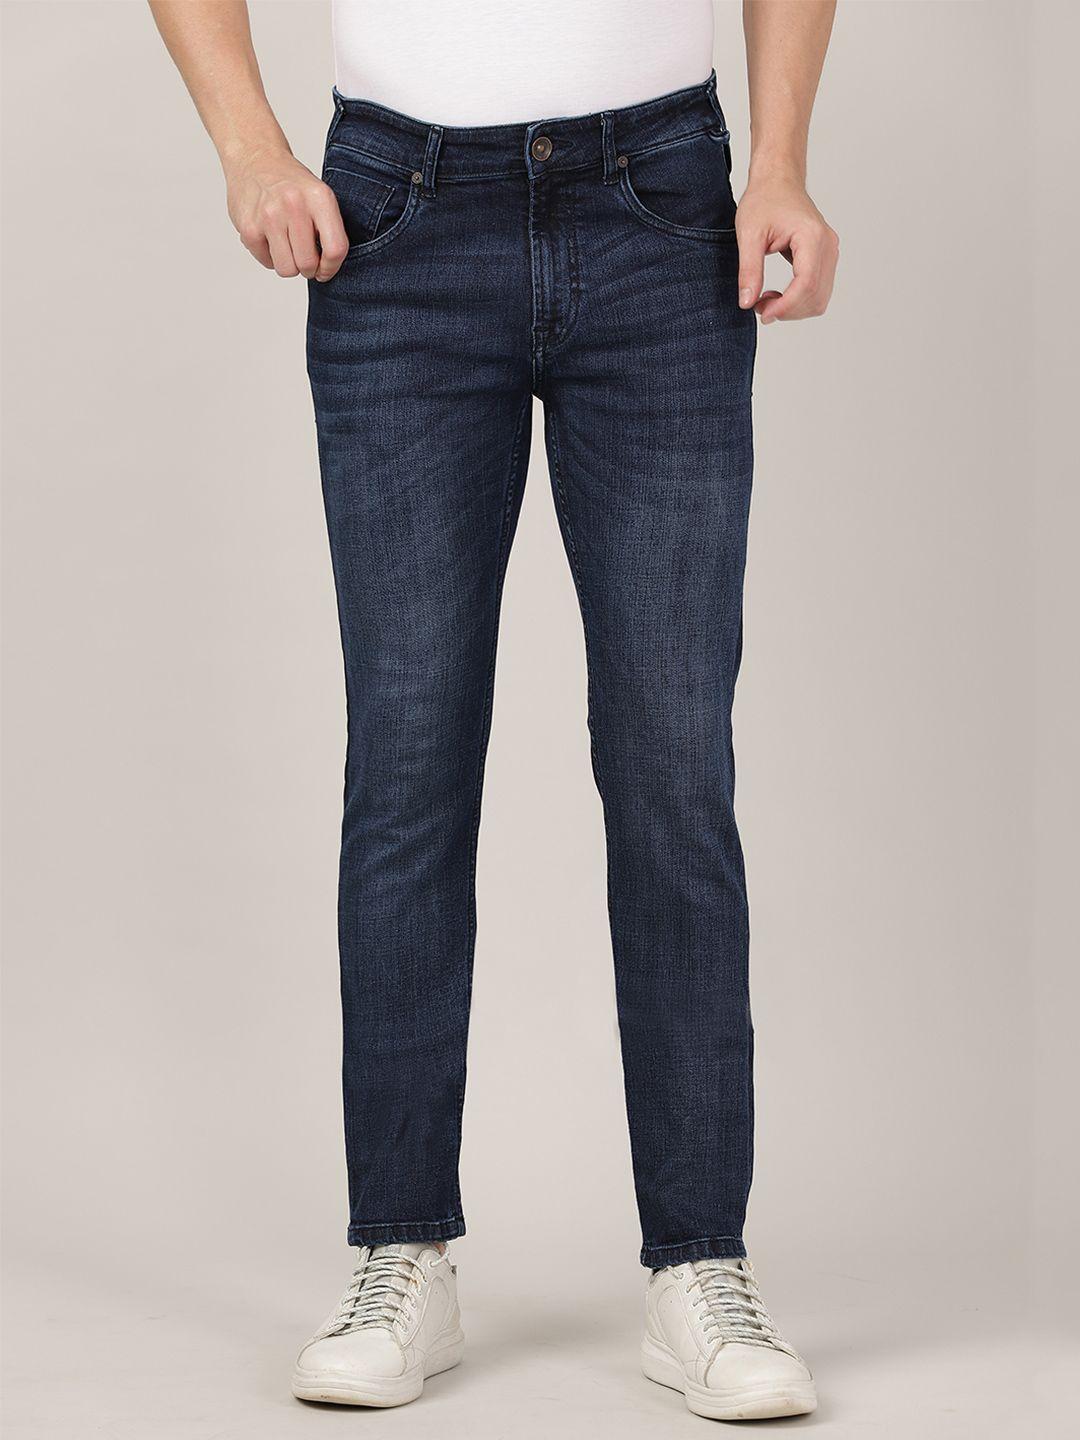 merchant marine men navy blue slim fit mid-rise jeans